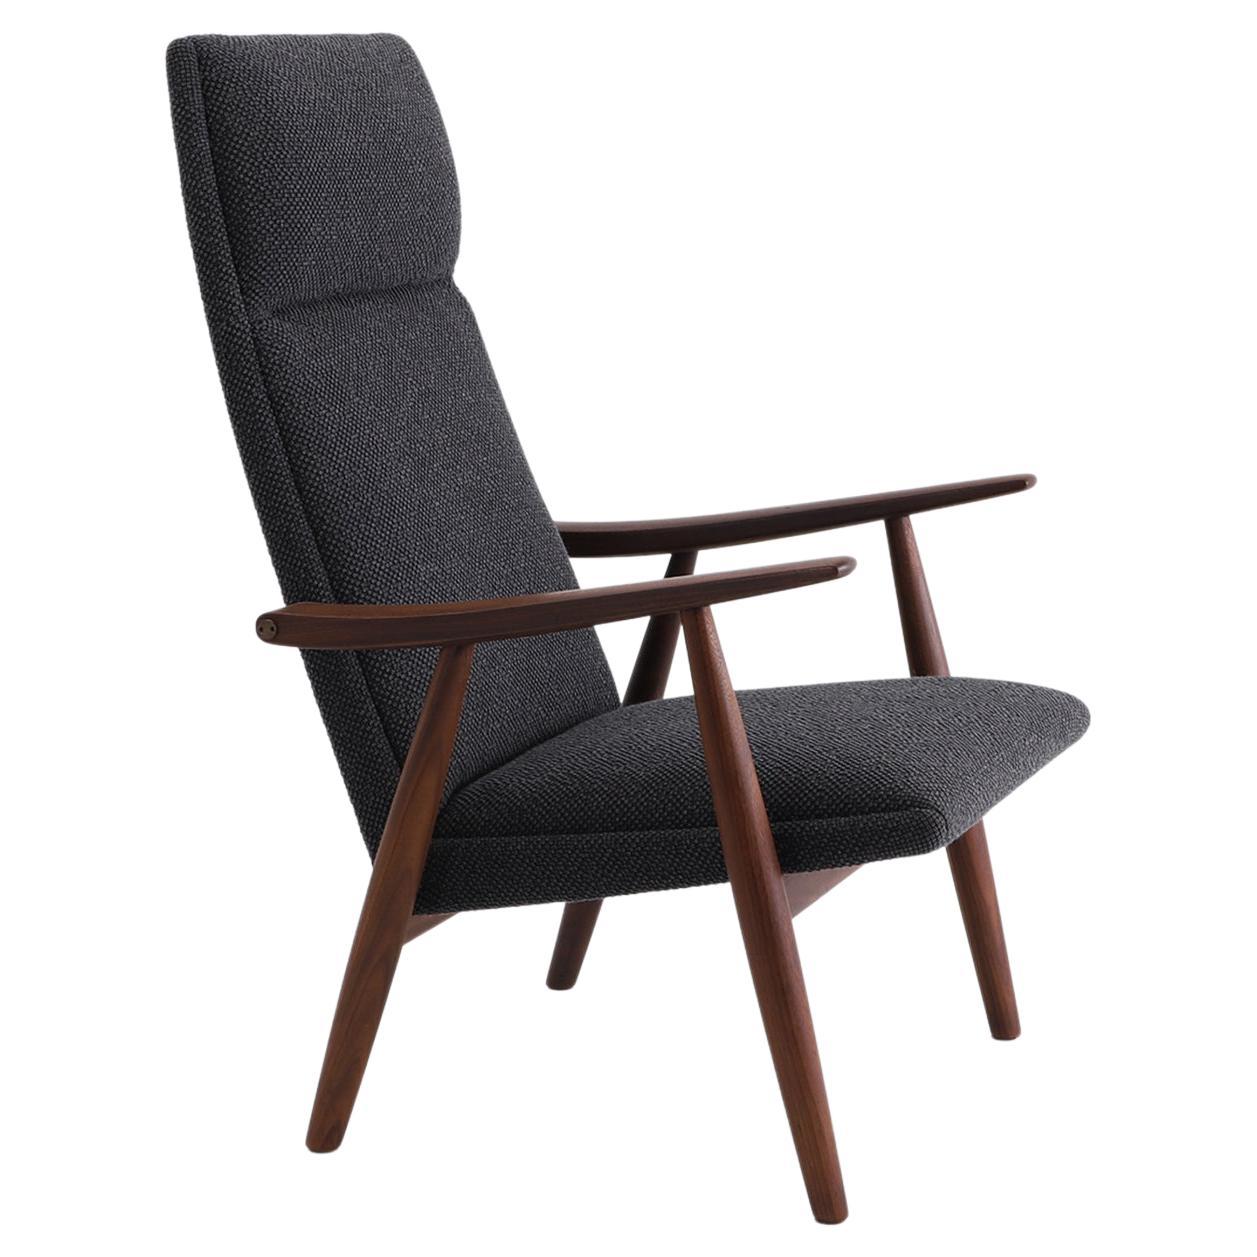 Hans J. Wegner / Easy chair. GE-260A / GETAMA